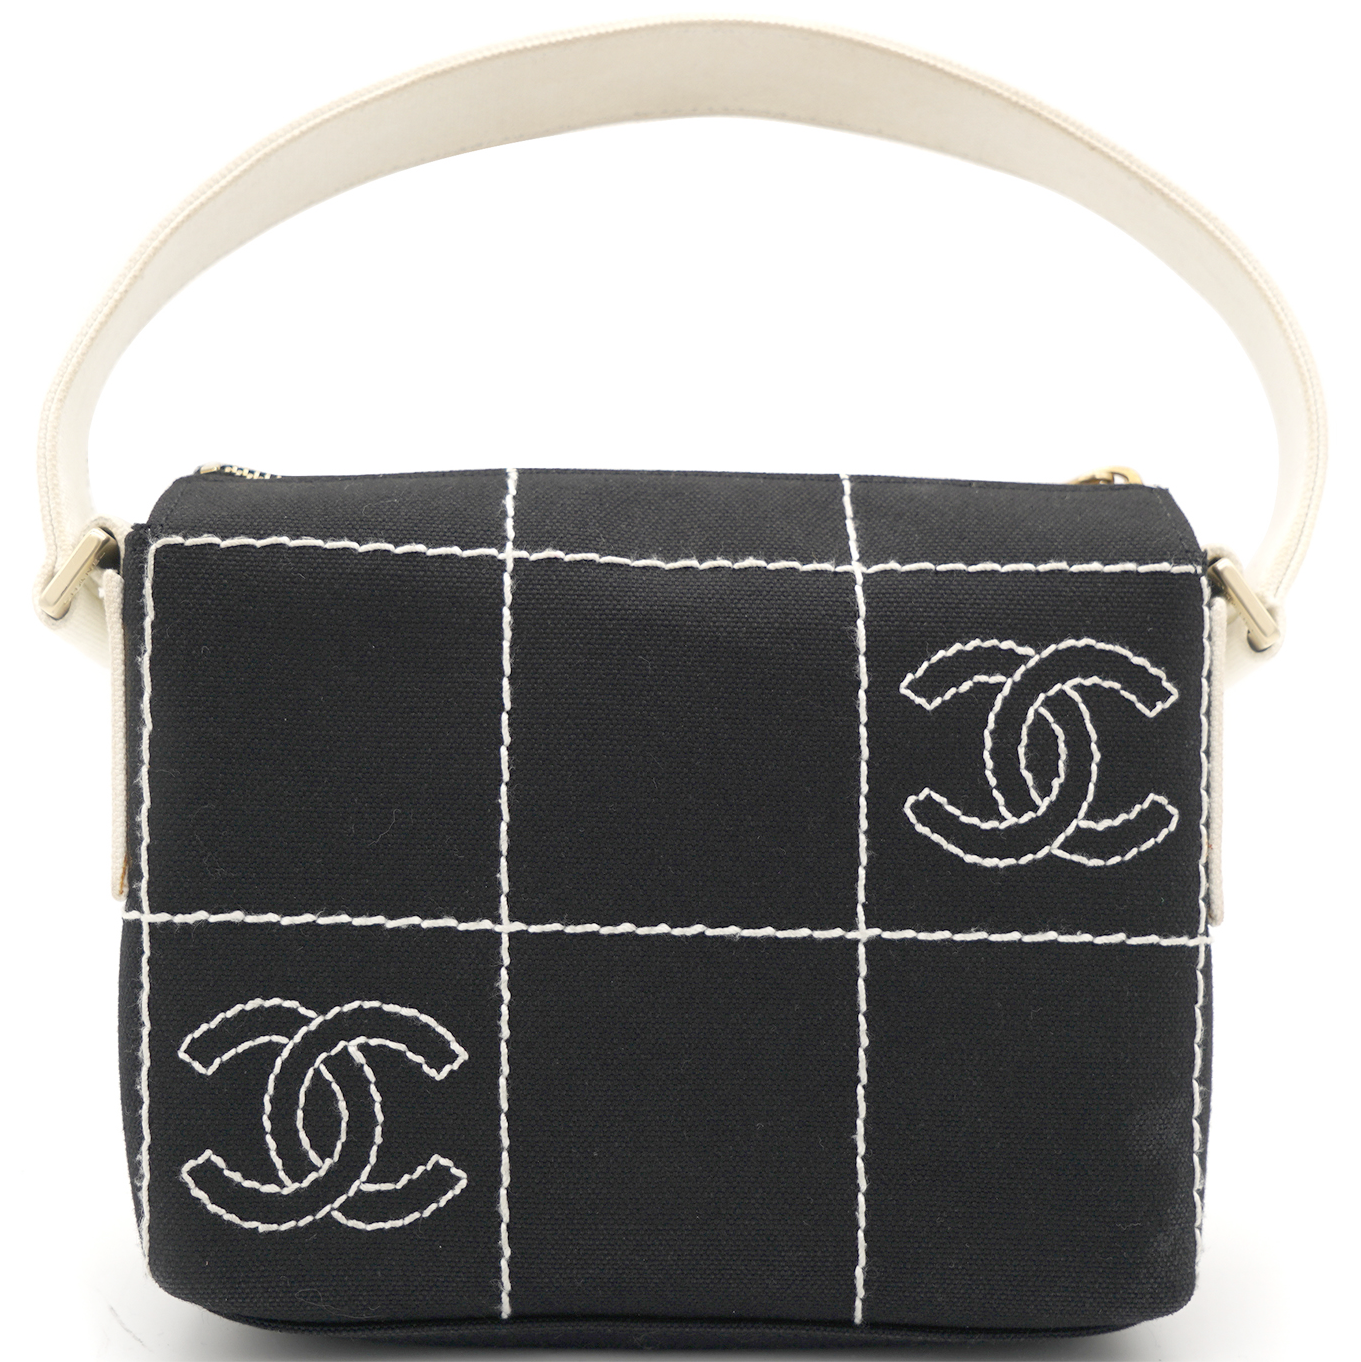 Preowned Chanel Patent Leather Vintage Shoulder Bag  Sabrinas Closet